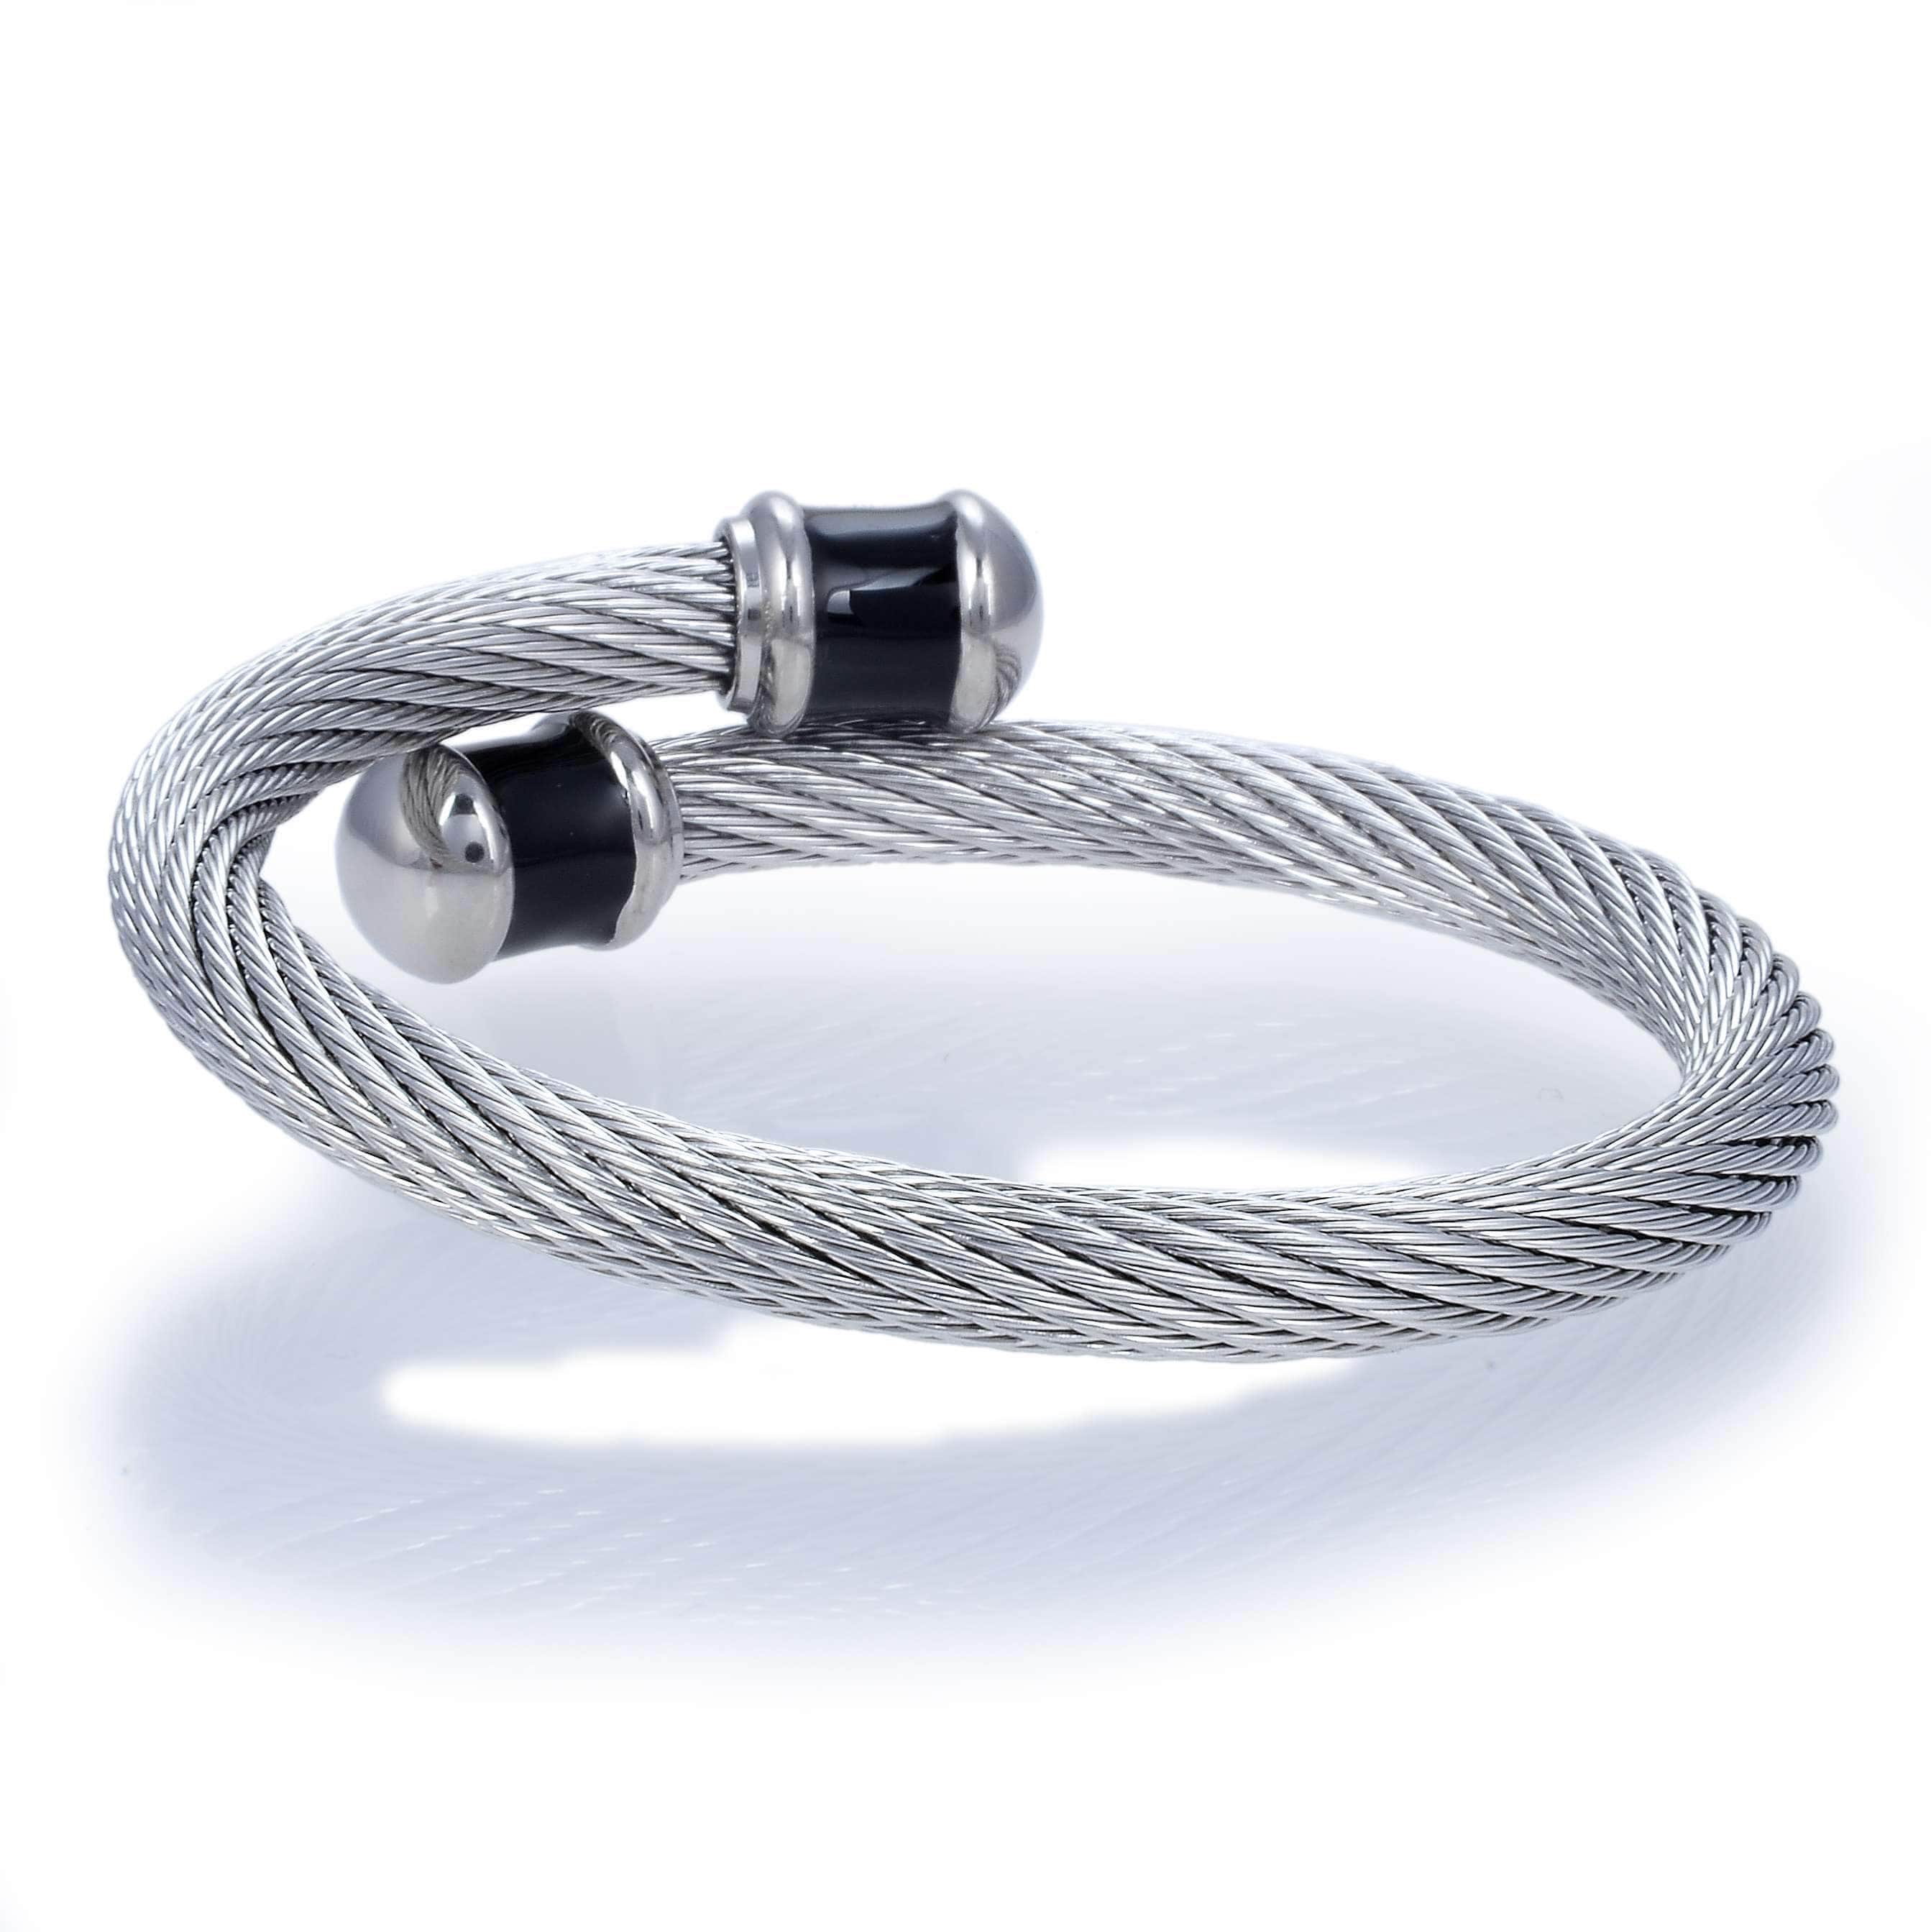 Kalifano Steel Hearts Jewelry Steel Hearts Rope Chain Black Tip Open Bangle Bracelet SHB200-50